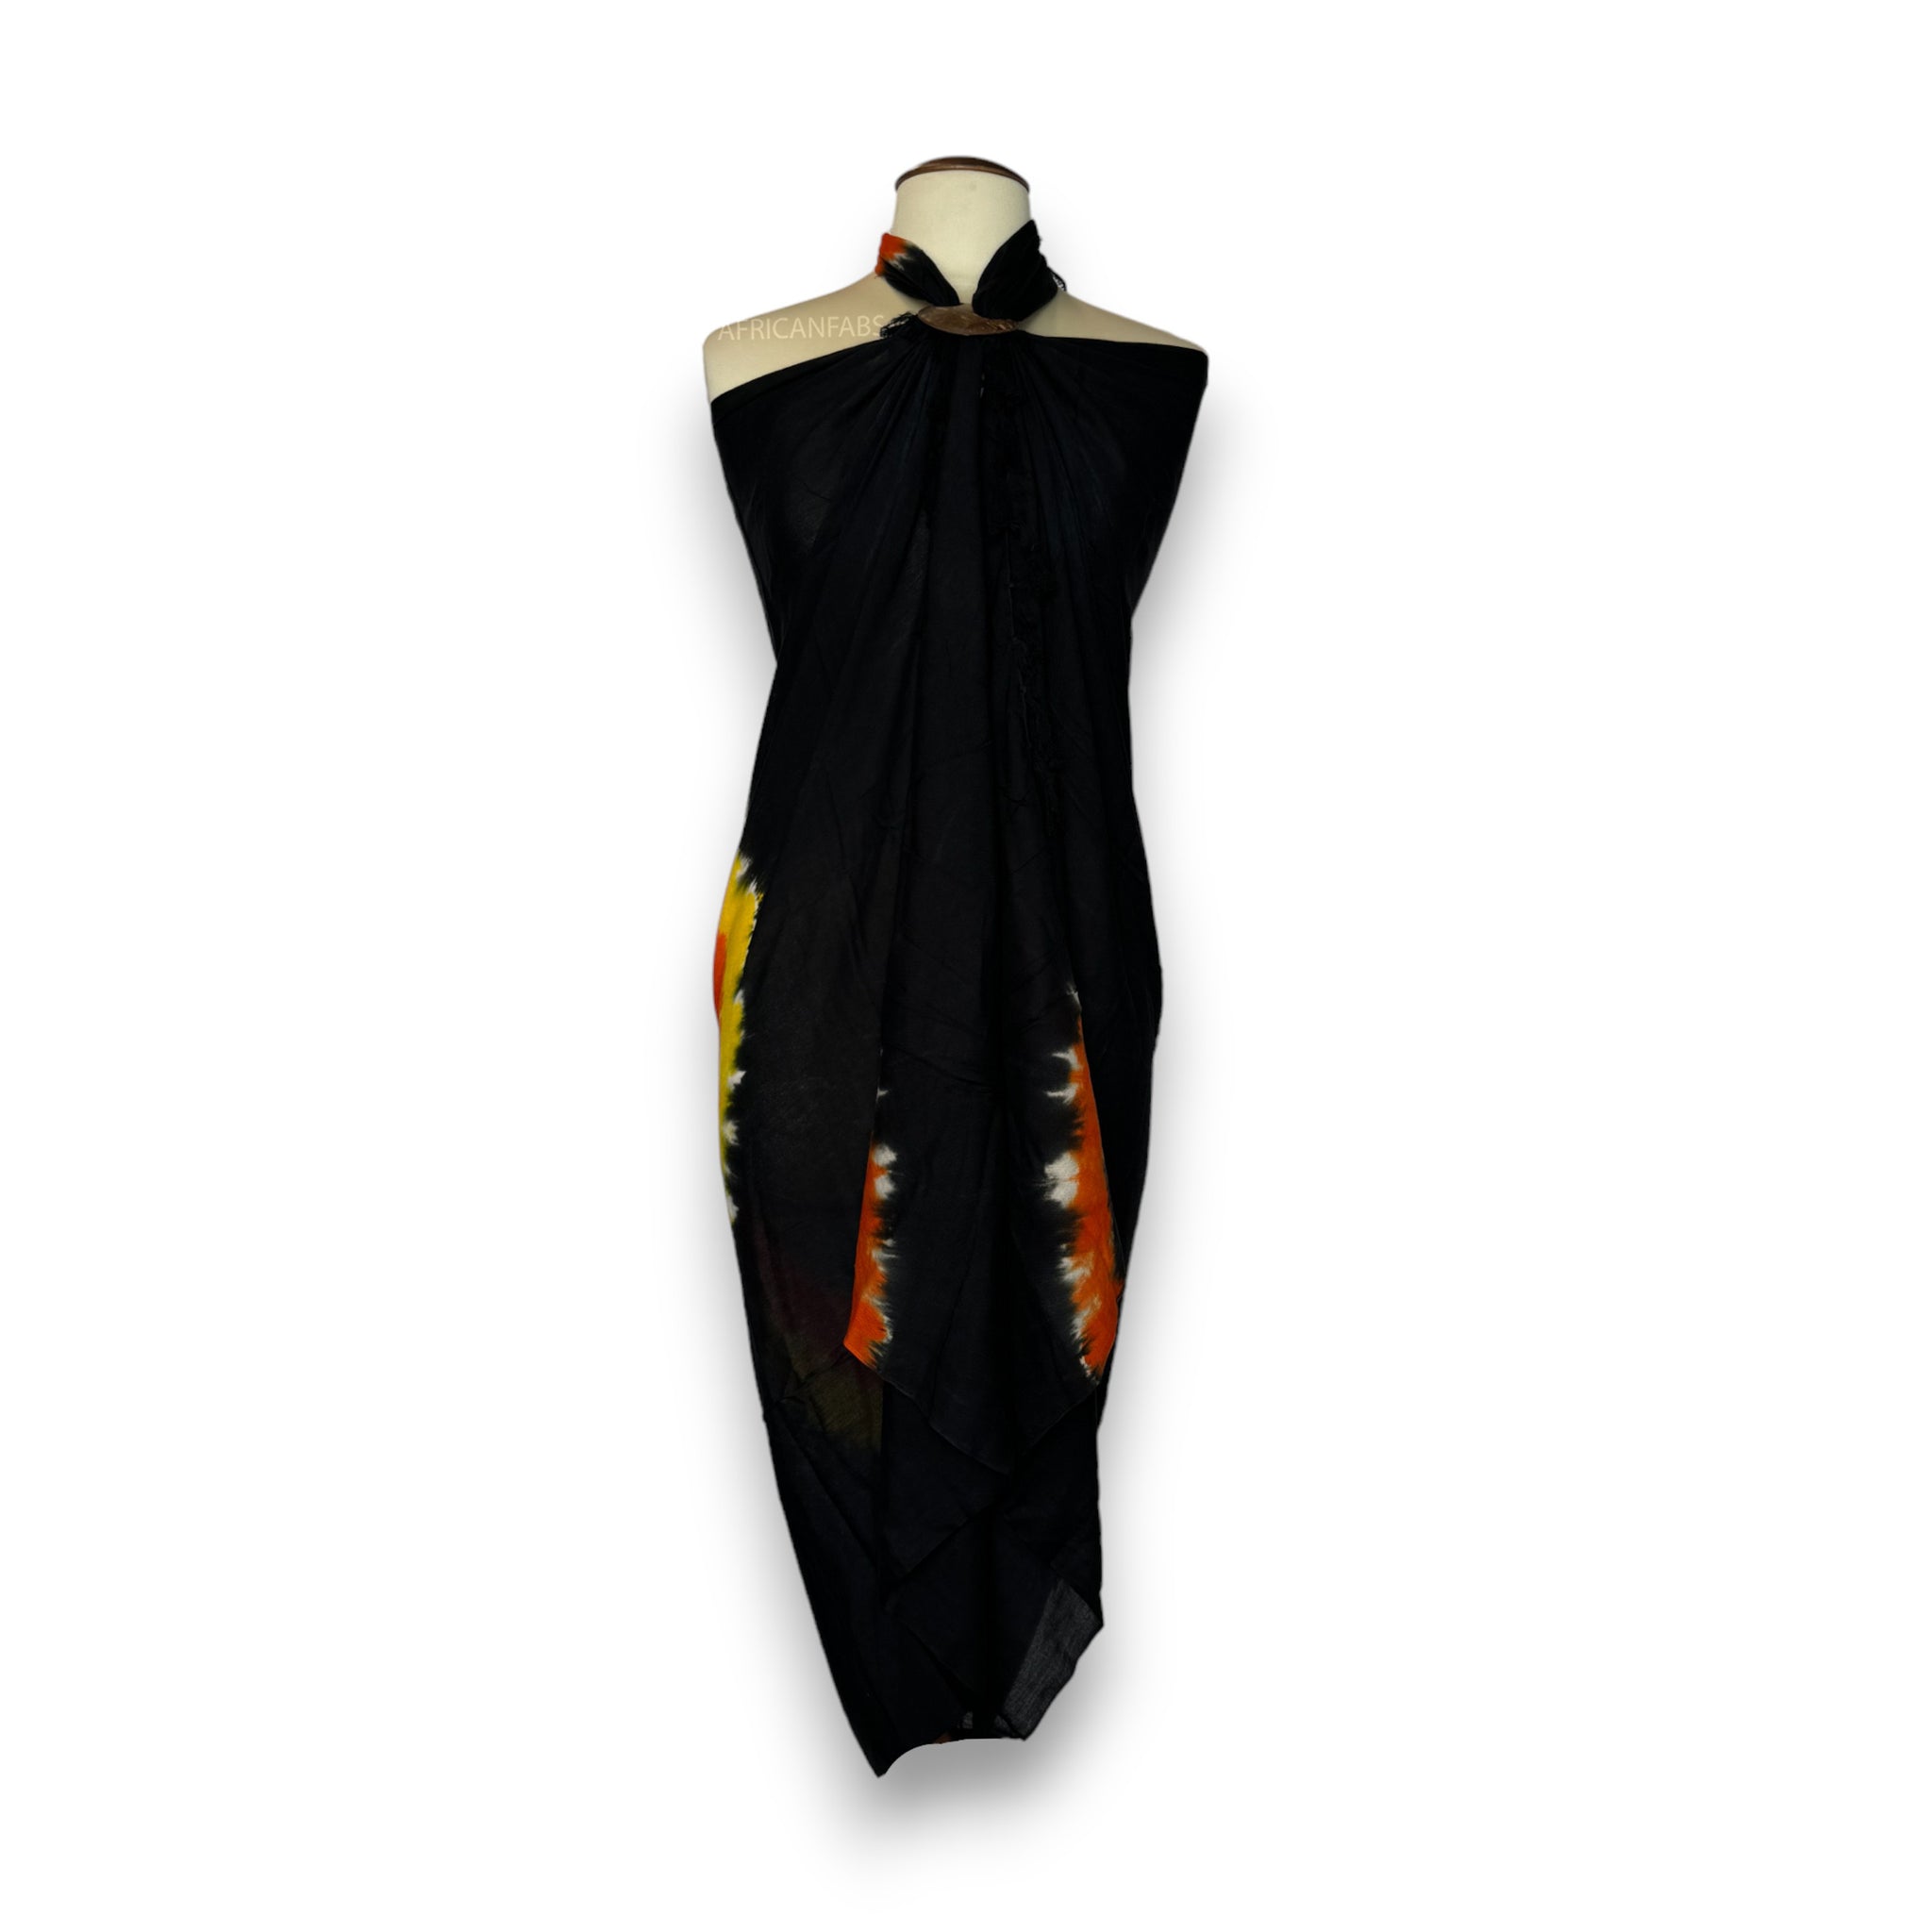 Sarong / pareo - Strandkleding wikkelrok - Tie dye Zwart